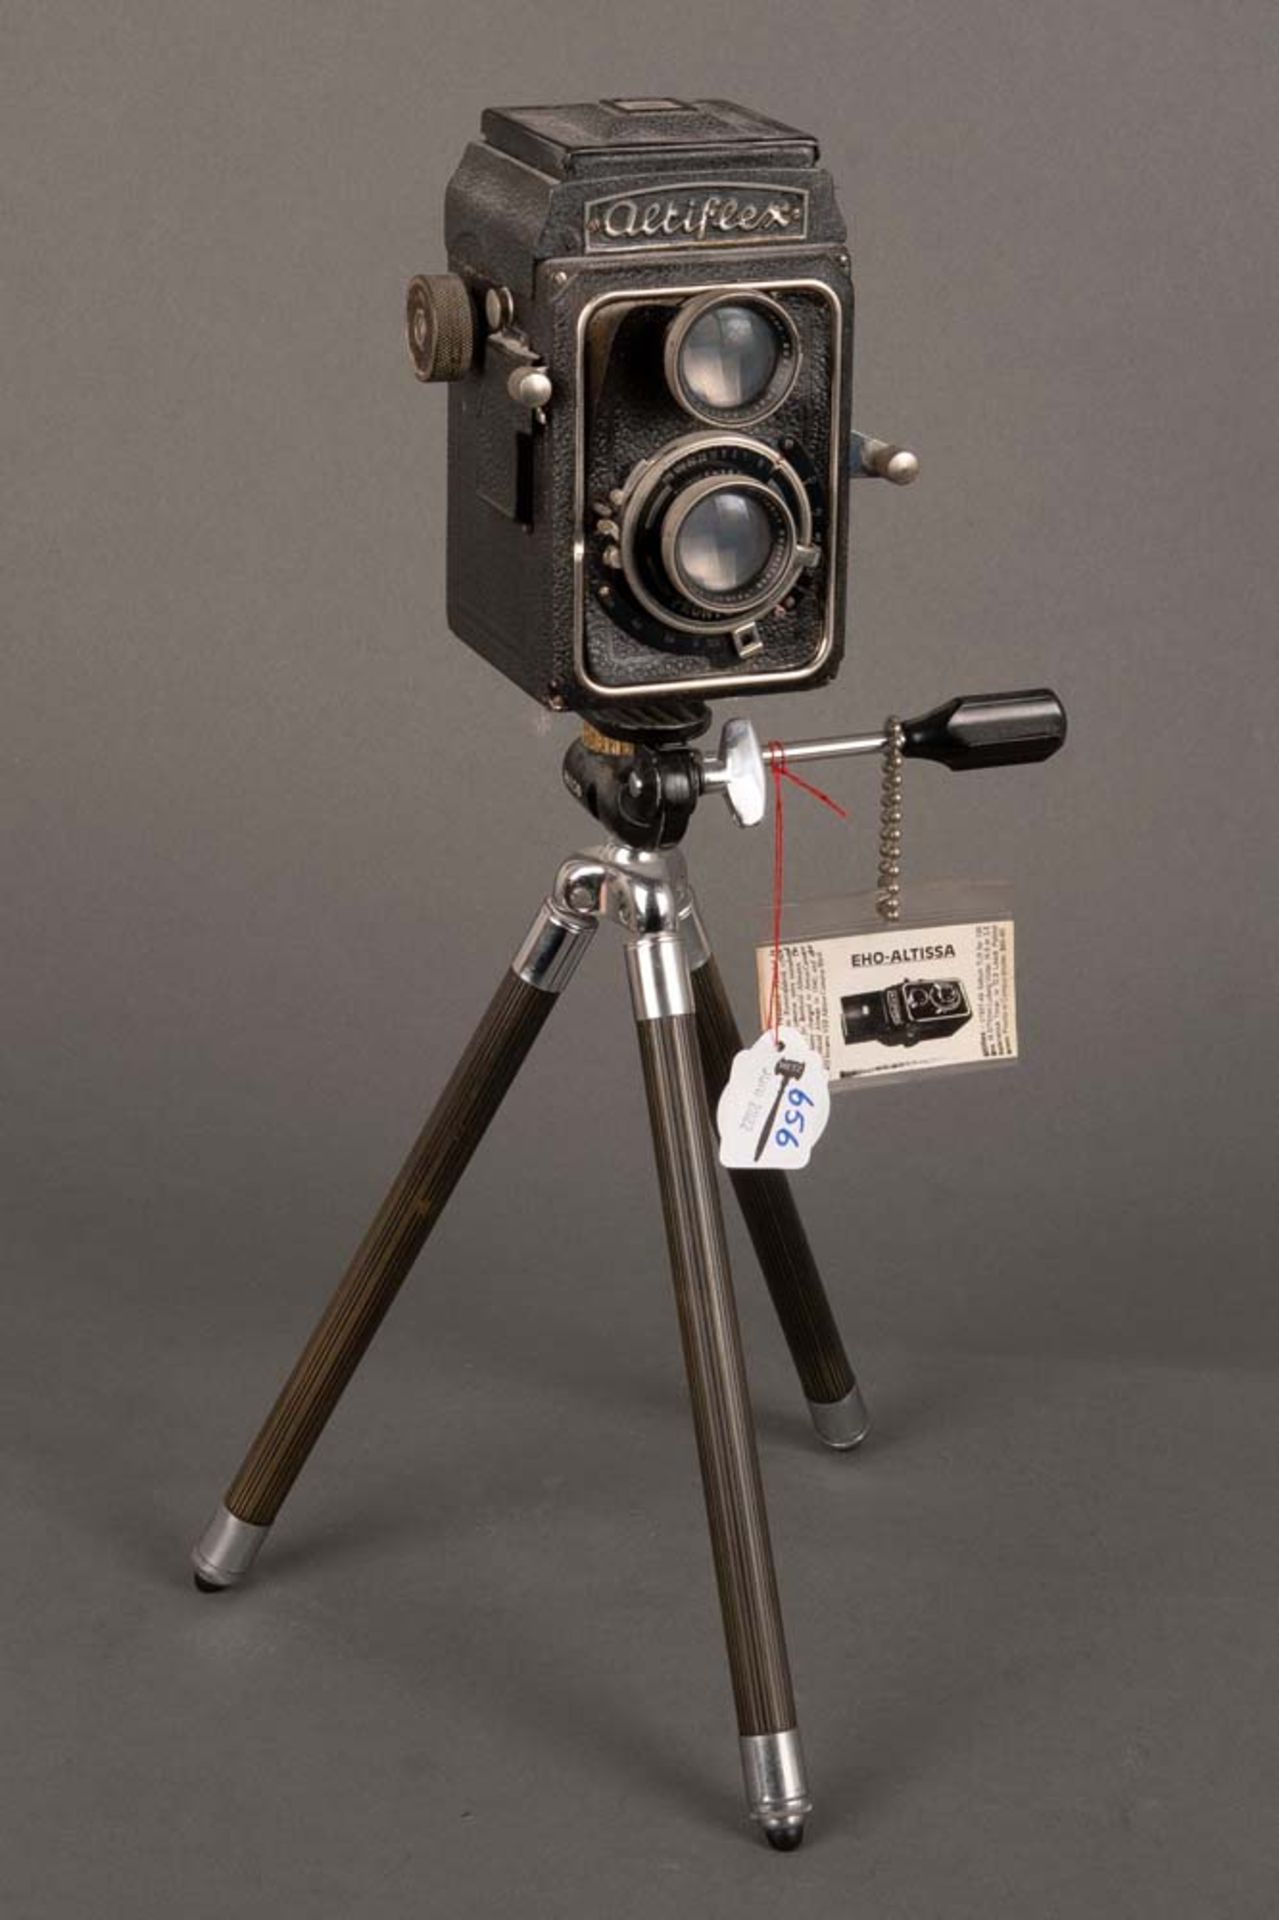 Kamera auf Stativ. EHO-ALTISSA, Altiflex 1937-49, H=13 cm, B=7,8 cm, T=9,7 cm. (Funktion ungeprüft)